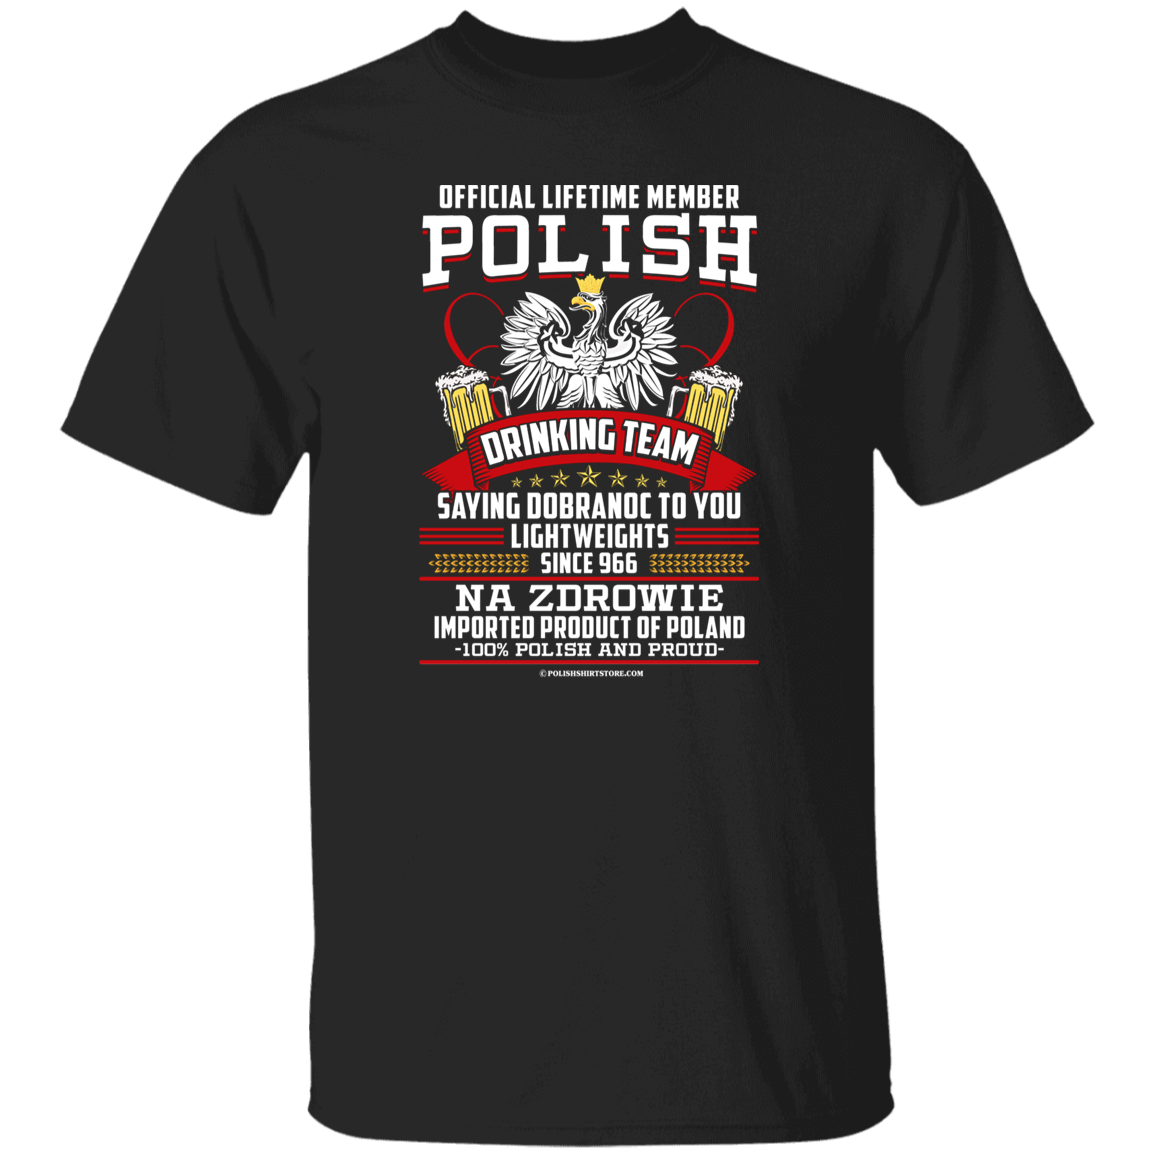 Polish Drinking Team Saying Dobranoc To You Lightweights Since 966 Apparel CustomCat G500 5.3 oz. T-Shirt Black S